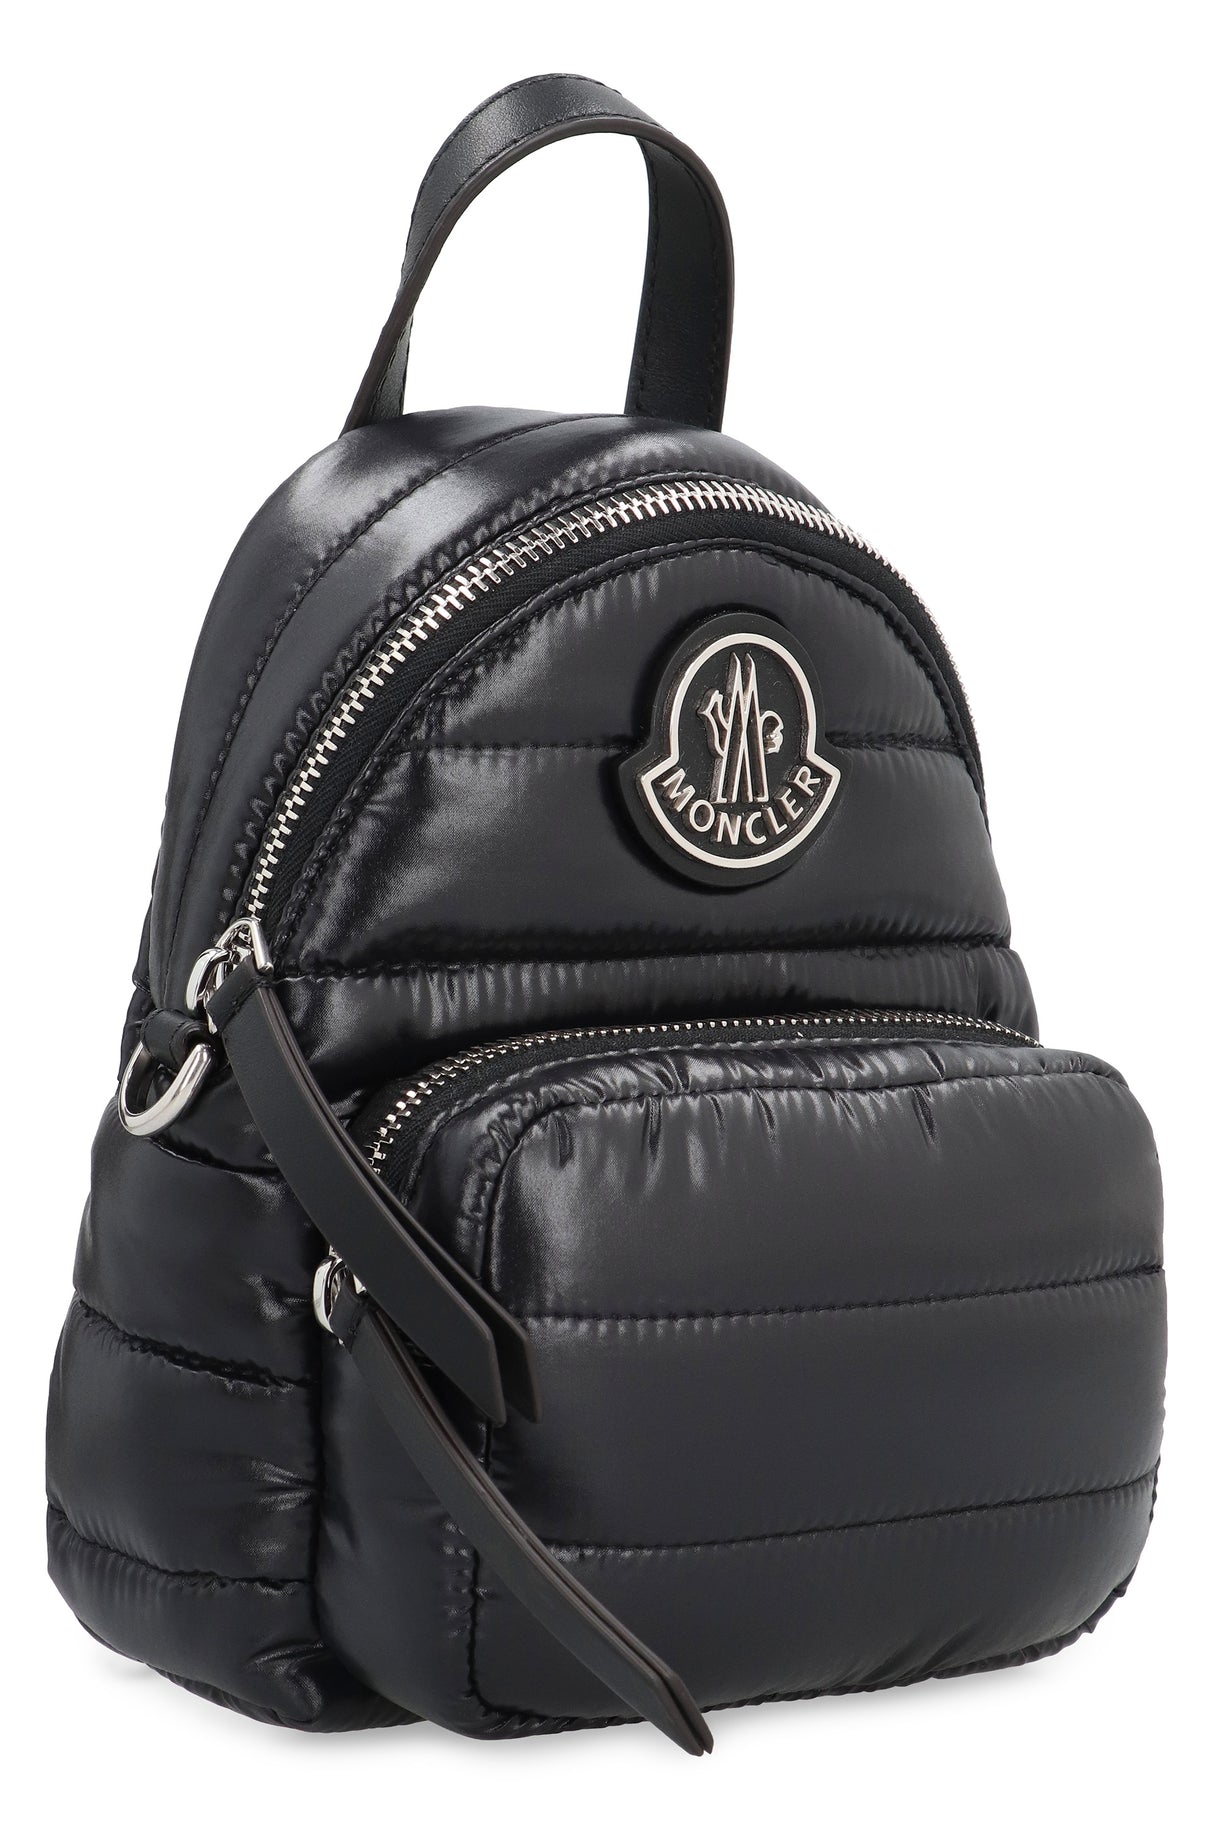 Black Nylon Messenger Handbag - Padded, Removable Strap, Silver-Tone Hardware